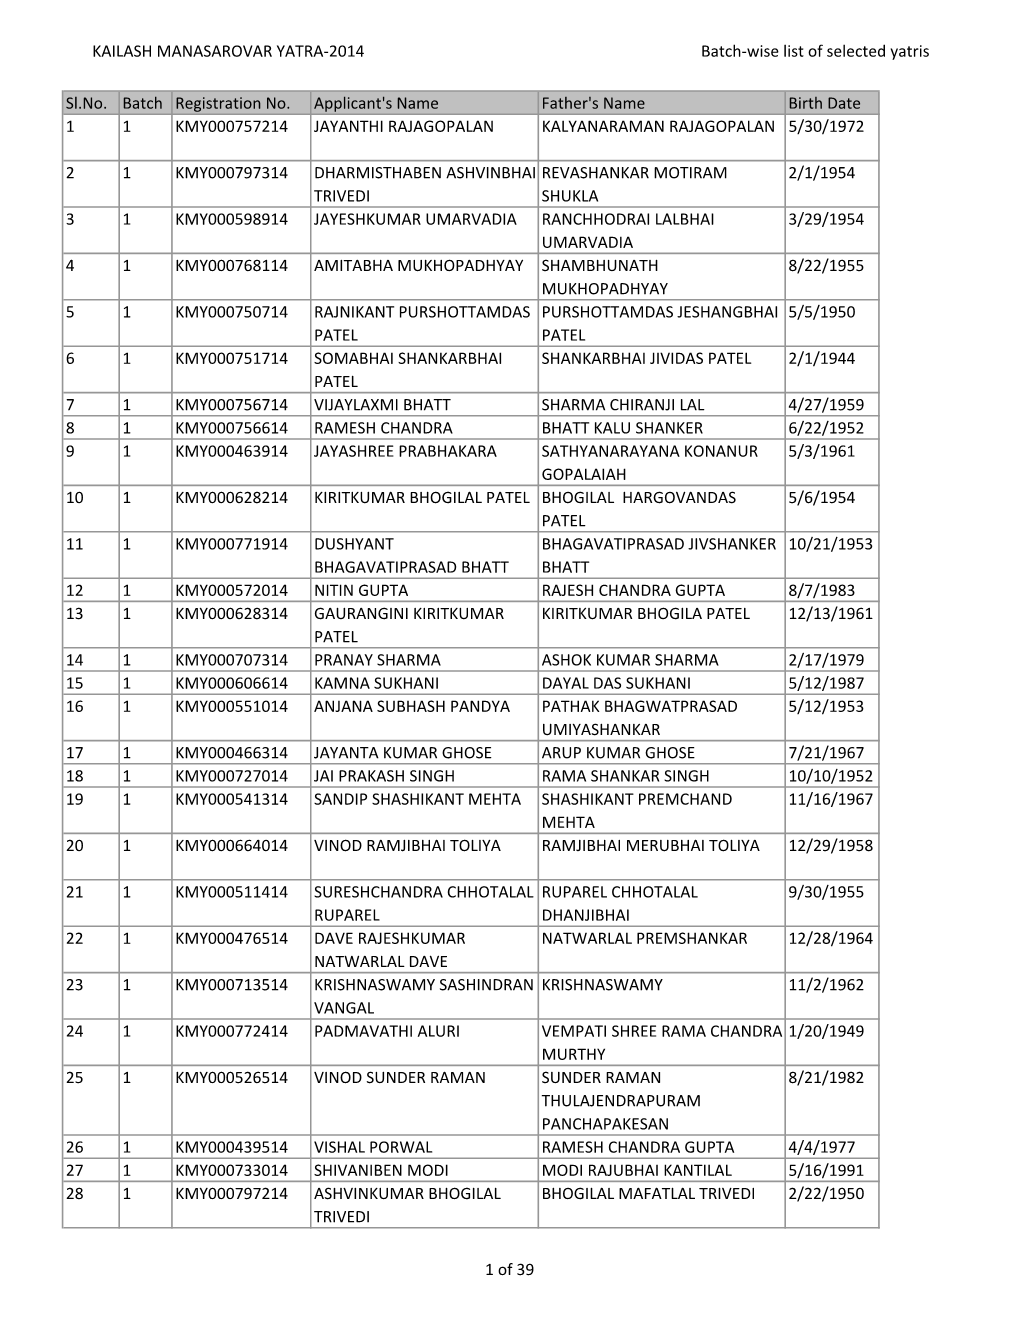 KAILASH MANASAROVAR YATRA-2014 Batch-Wise List of Selected Yatris